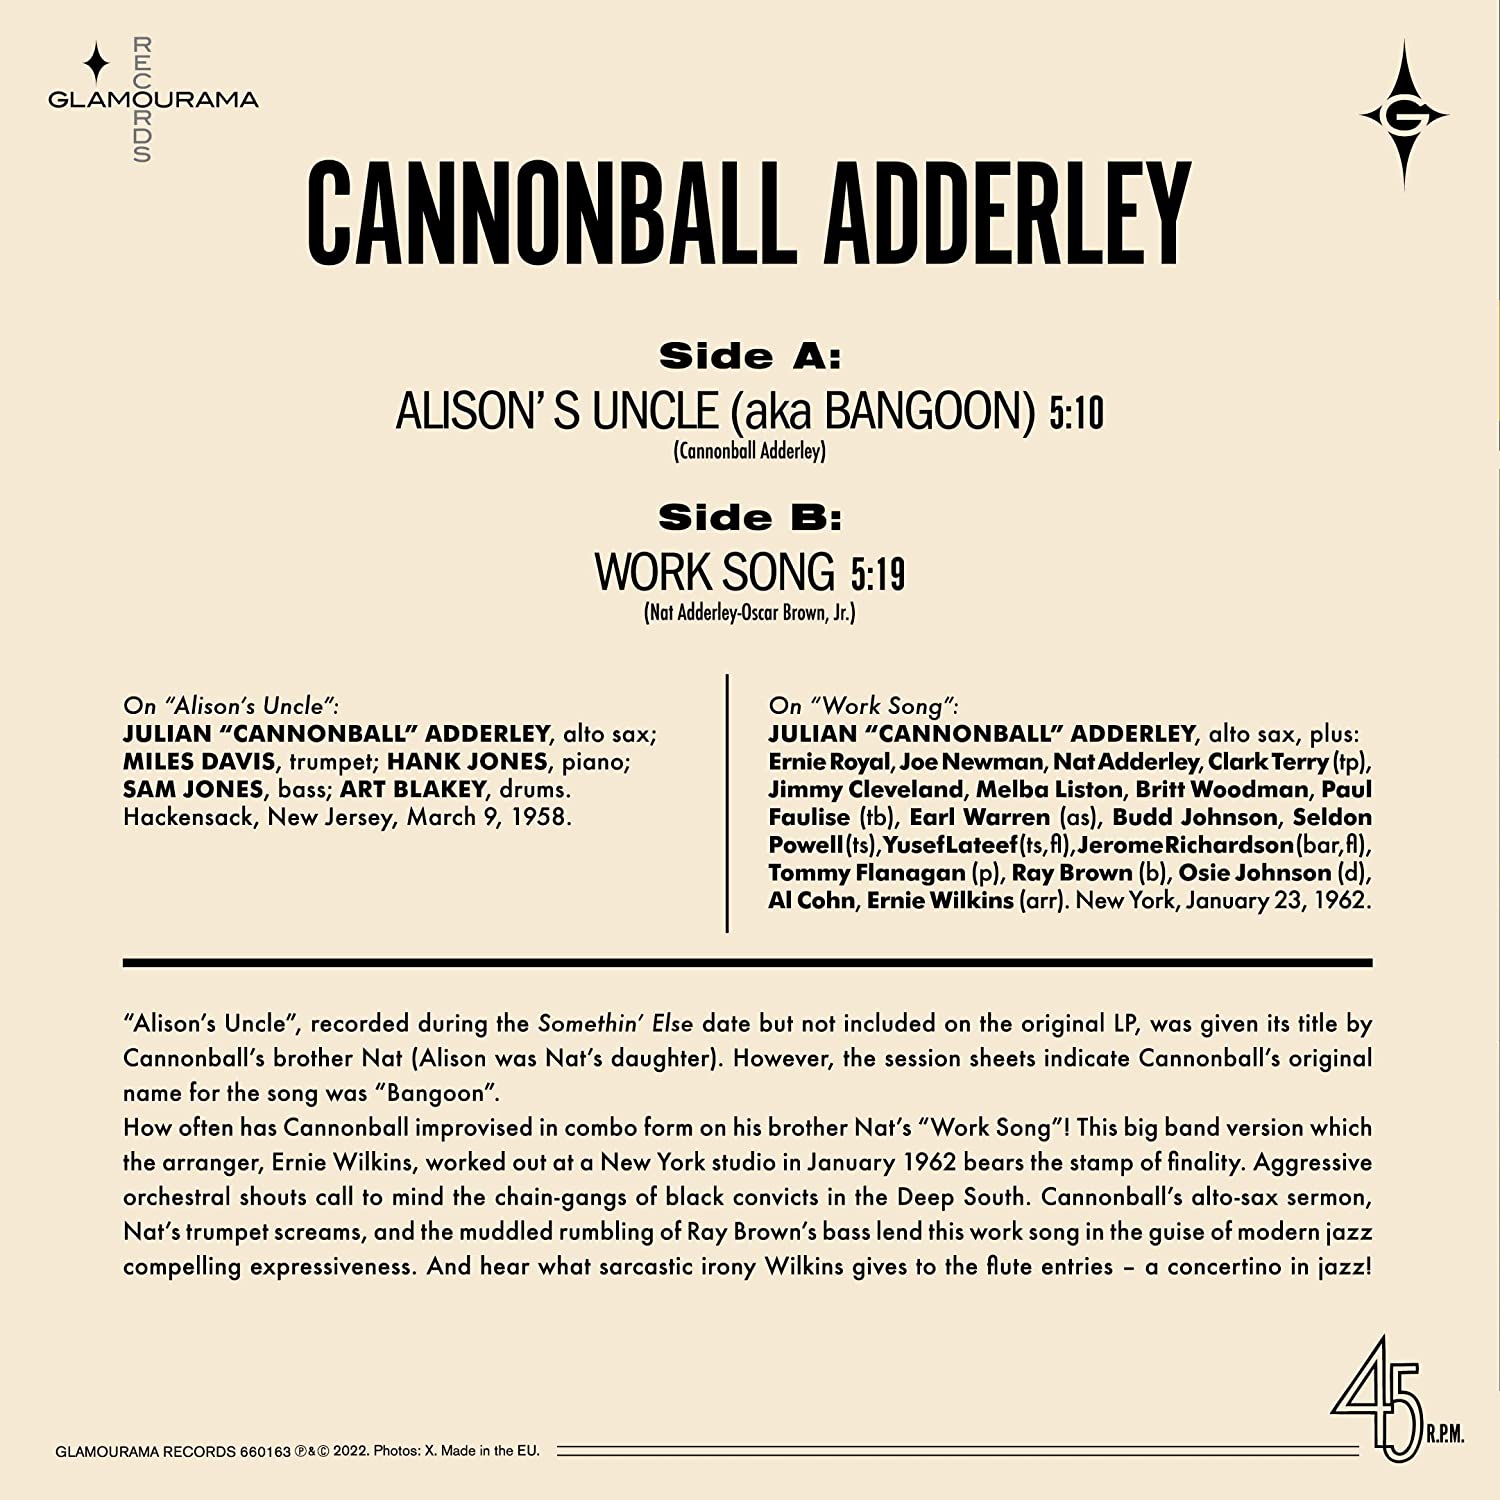 Cannonball Adderley (캐논볼 애덜리) - Something Else [LP+옐로우 컬러 7인치 싱글 Vinyl] 